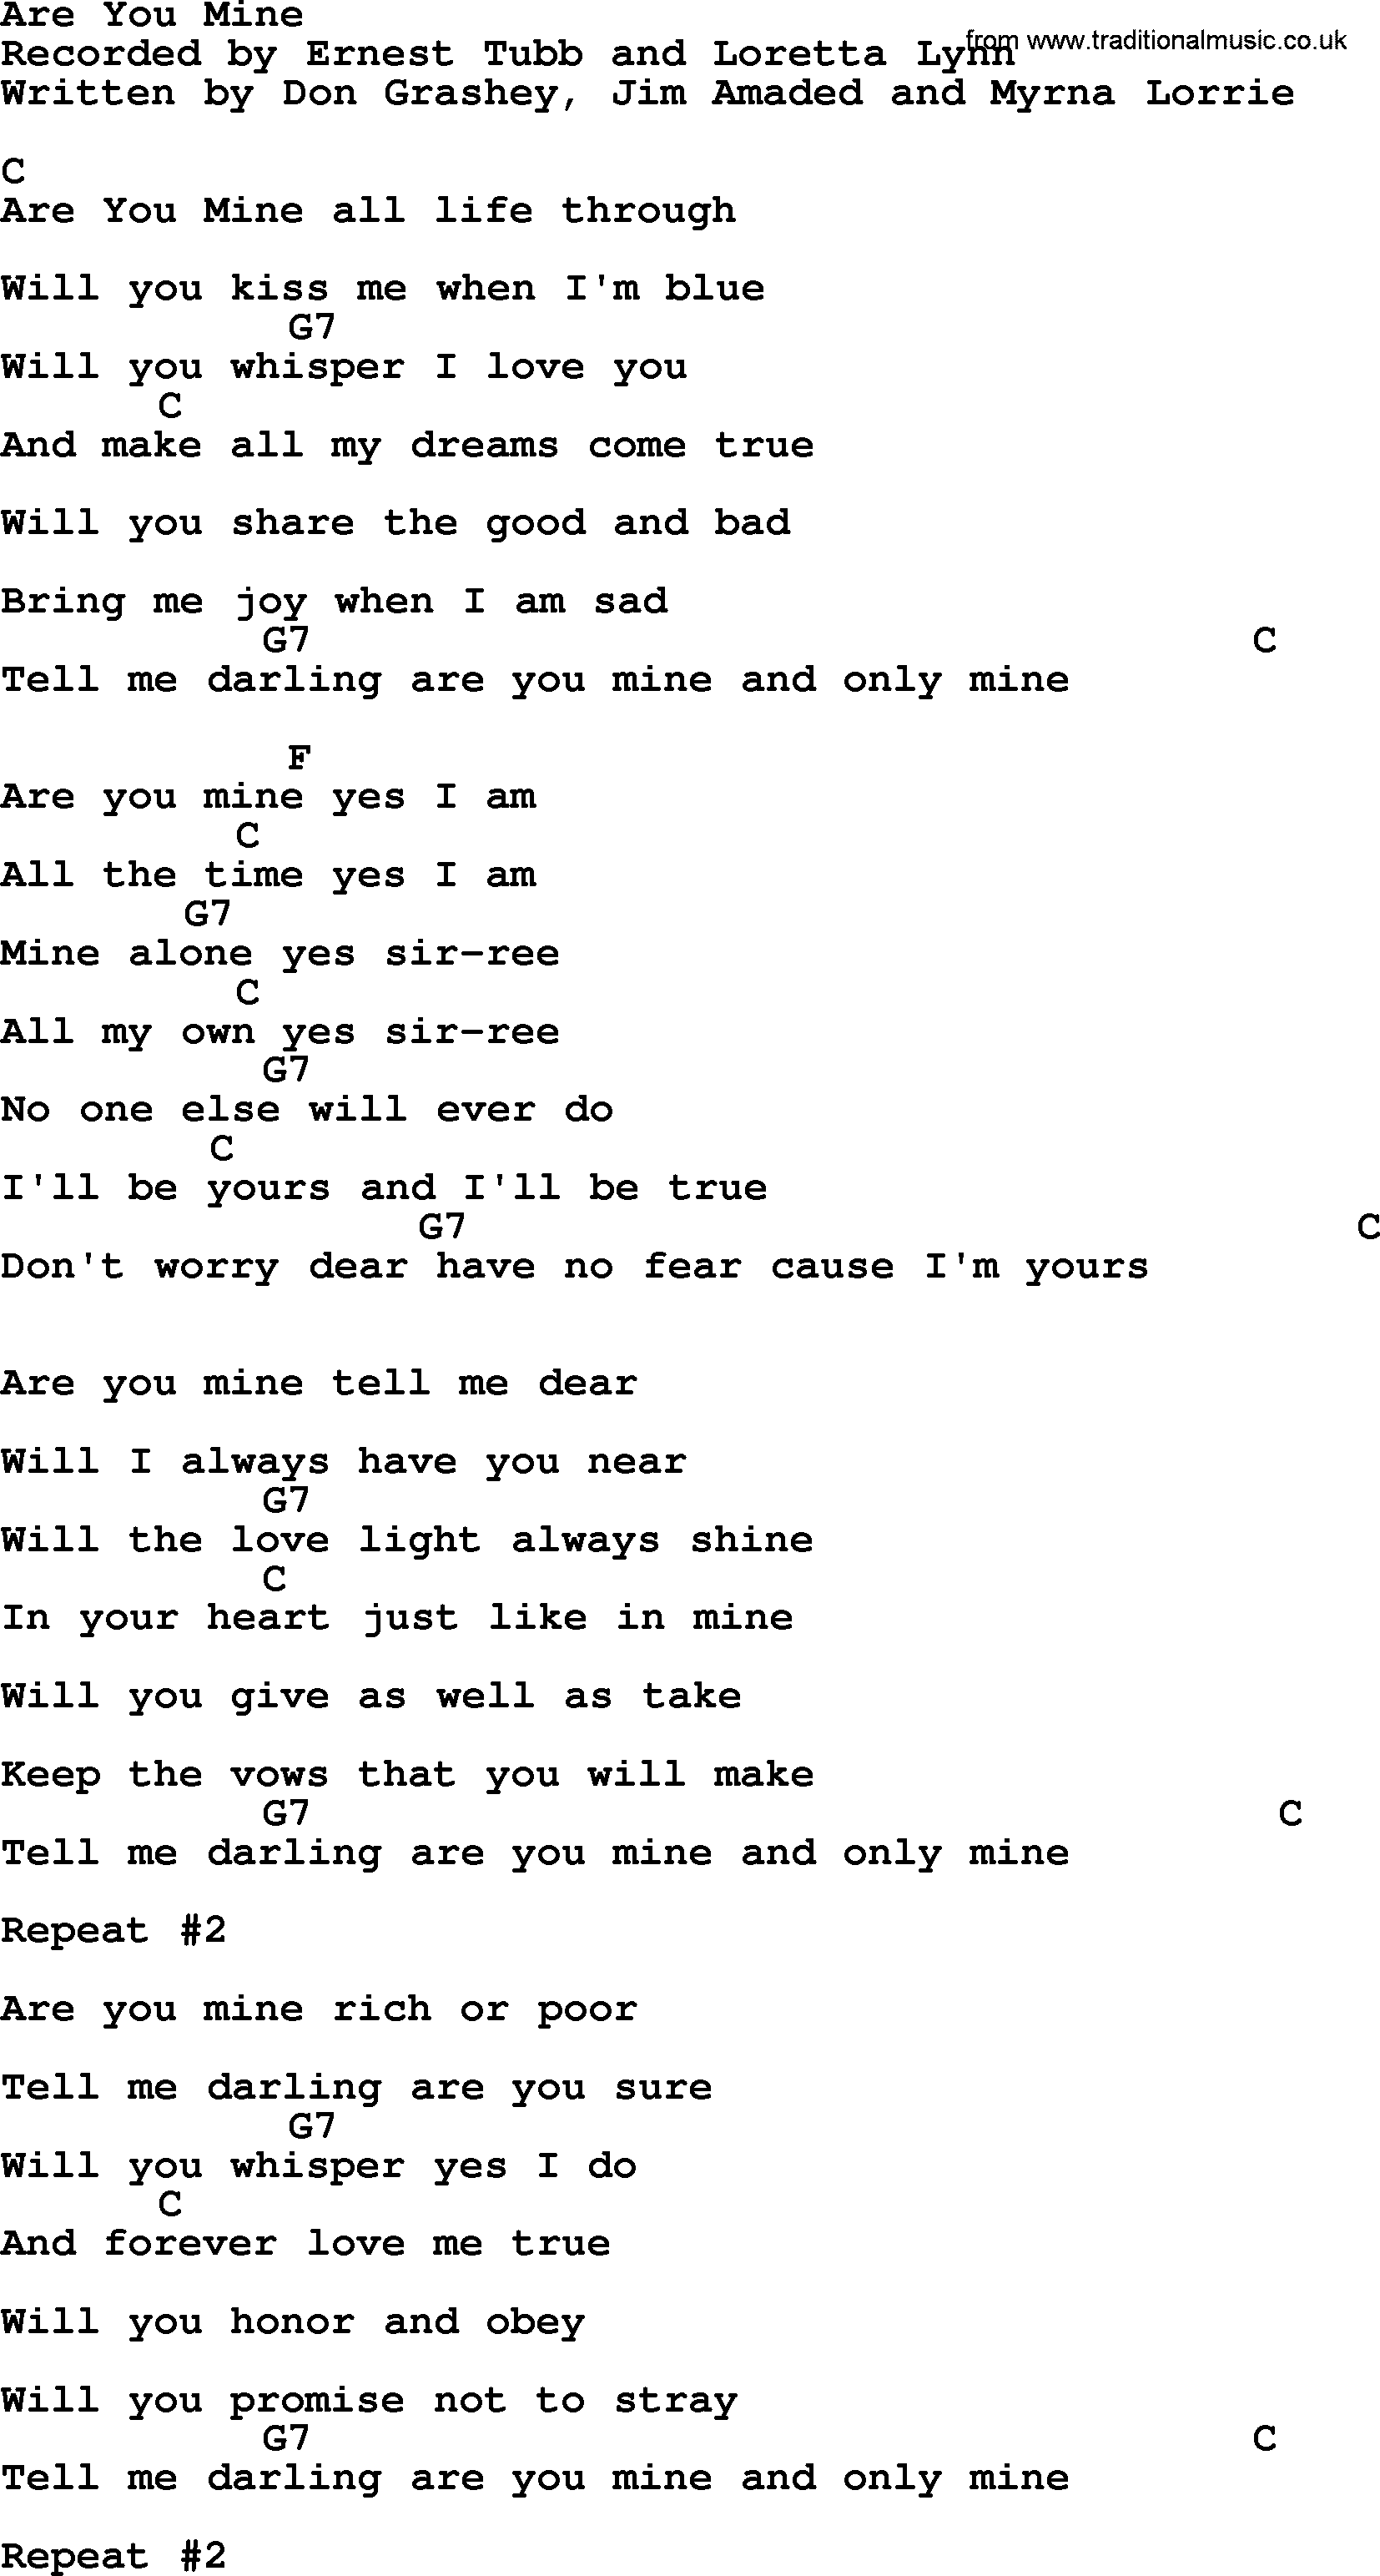 Loretta Lynn song: Are You Mine lyrics and chords